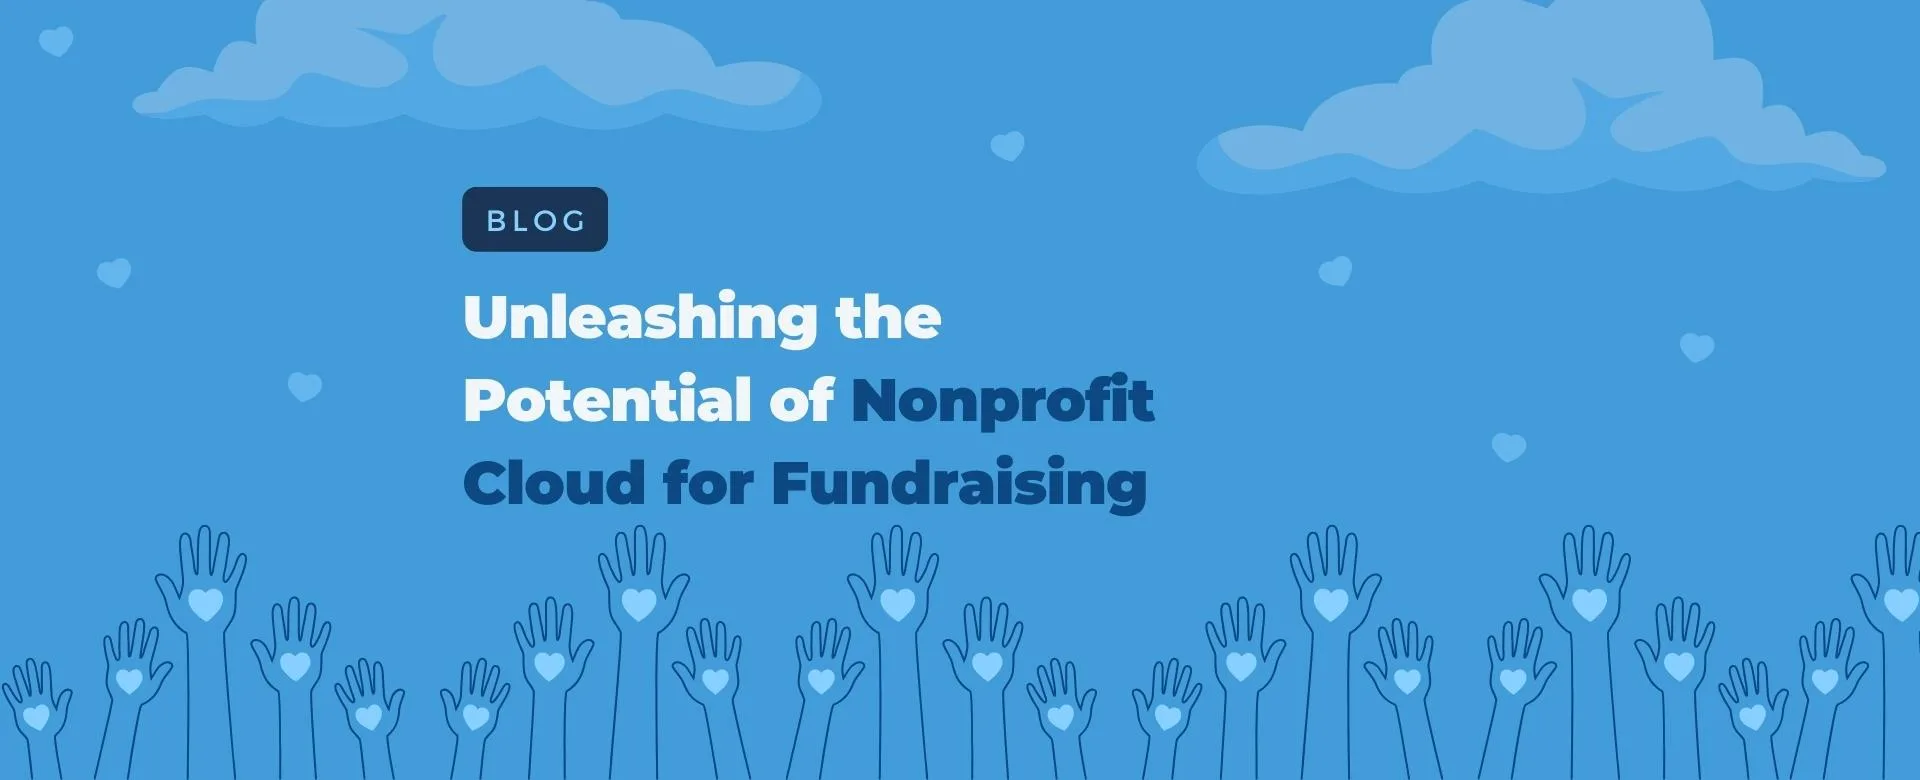 NonProfit Cloud for Fundraising